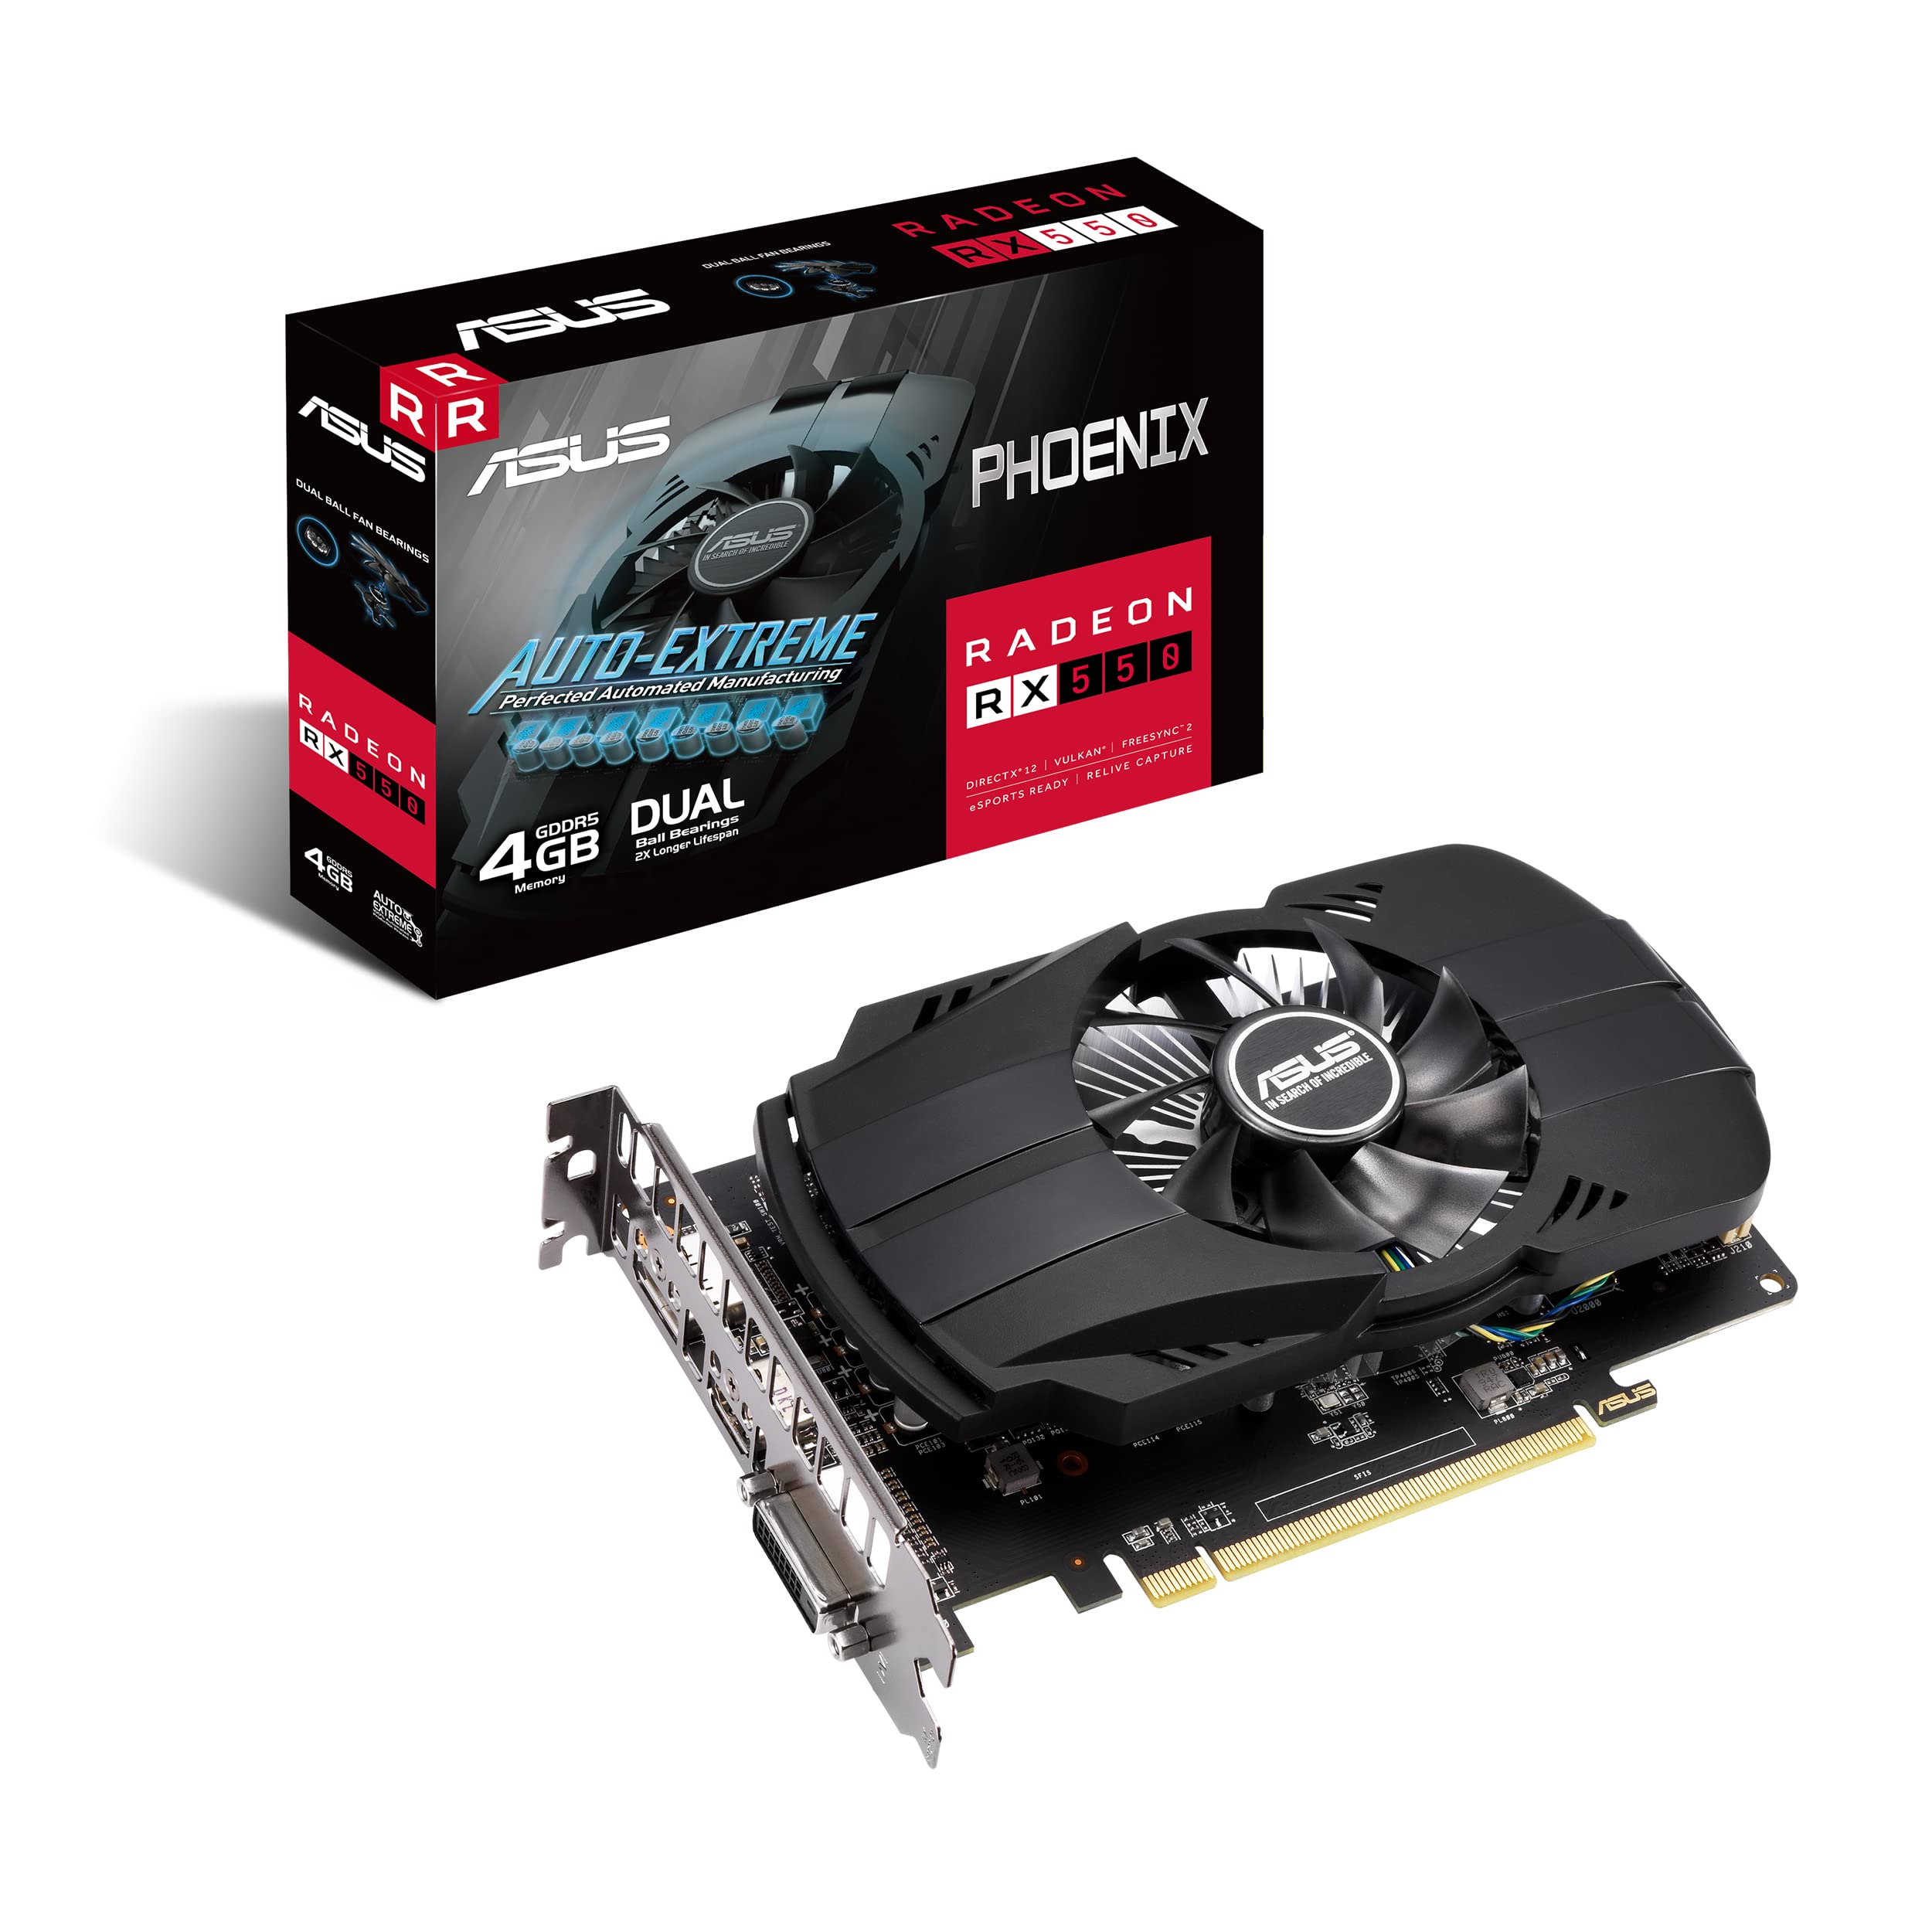 ASUS エイスース Phoenix AMD Radeon RX 550 グラフィックスカード PCIe 3.0 4GB GDDR5メモリ HDMI DisplayPort